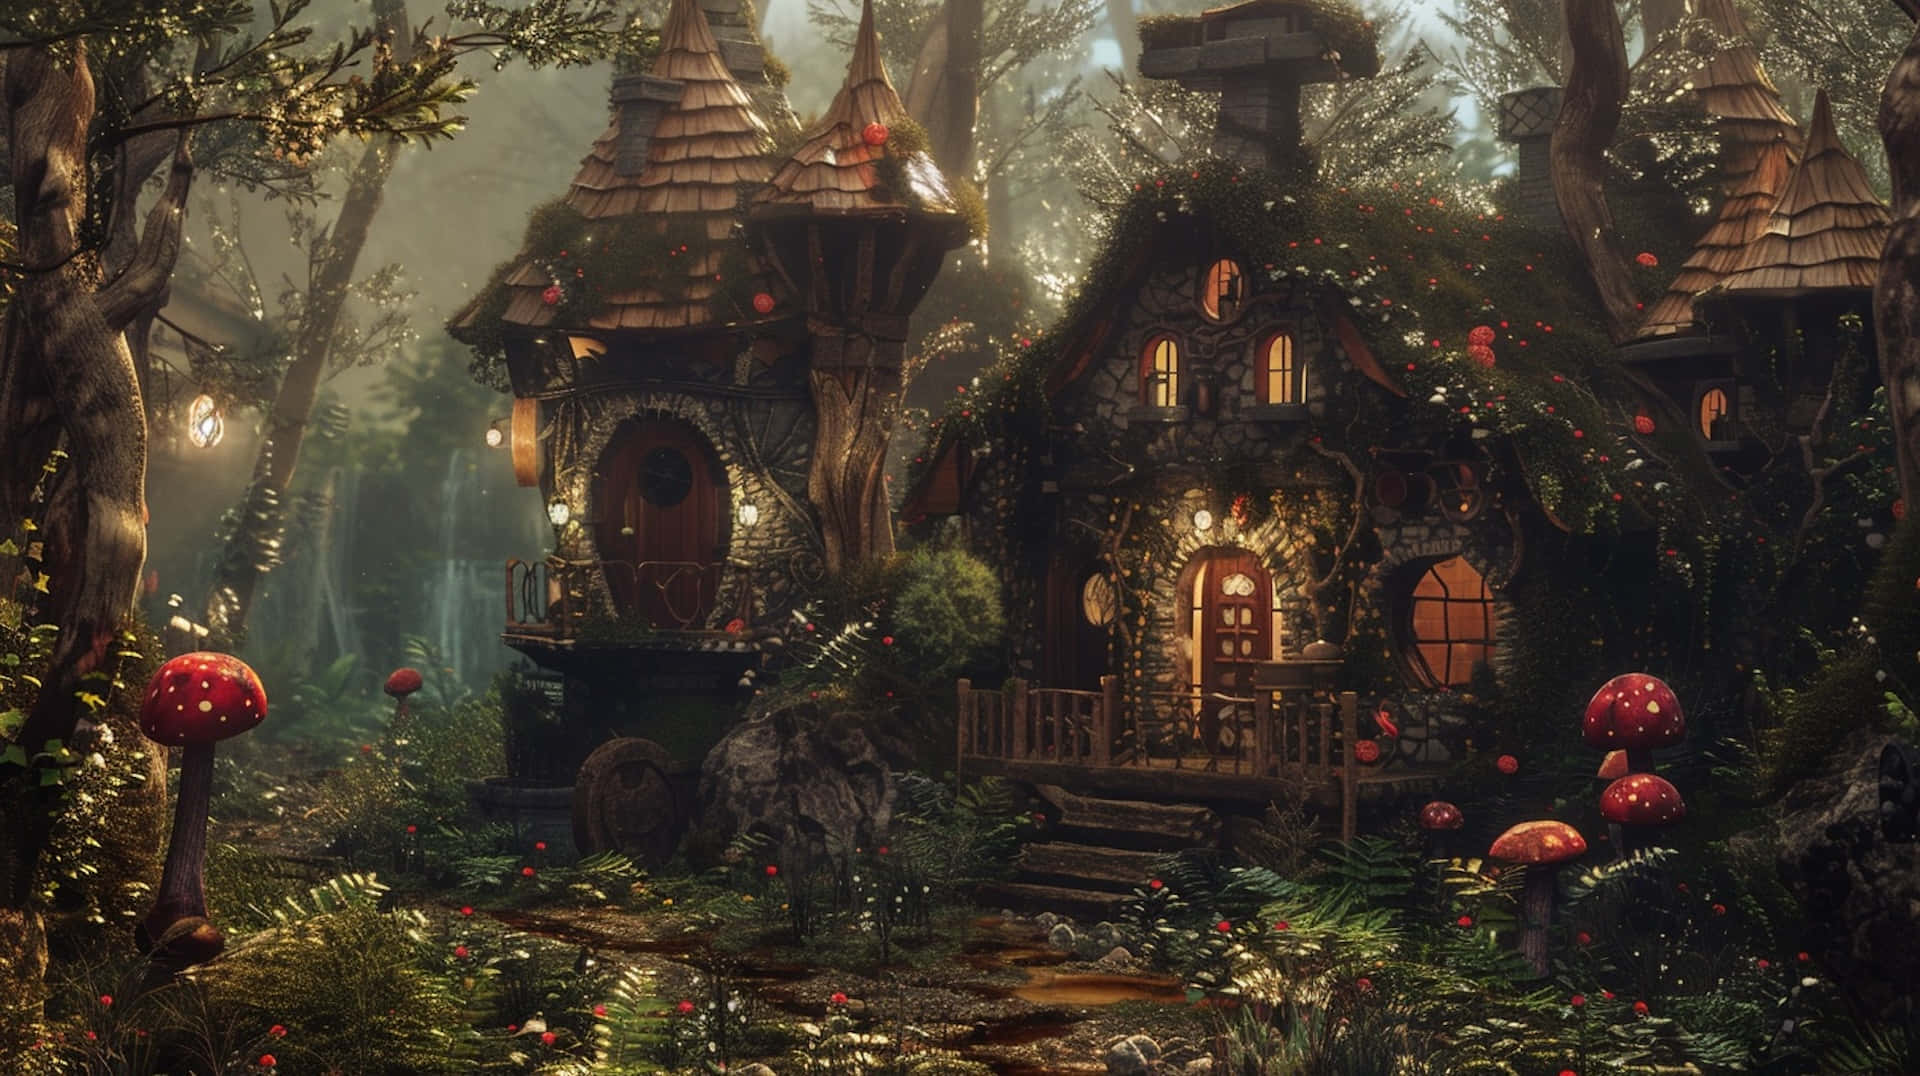 Enchanted Goblincore Forest Homes.jpg Wallpaper